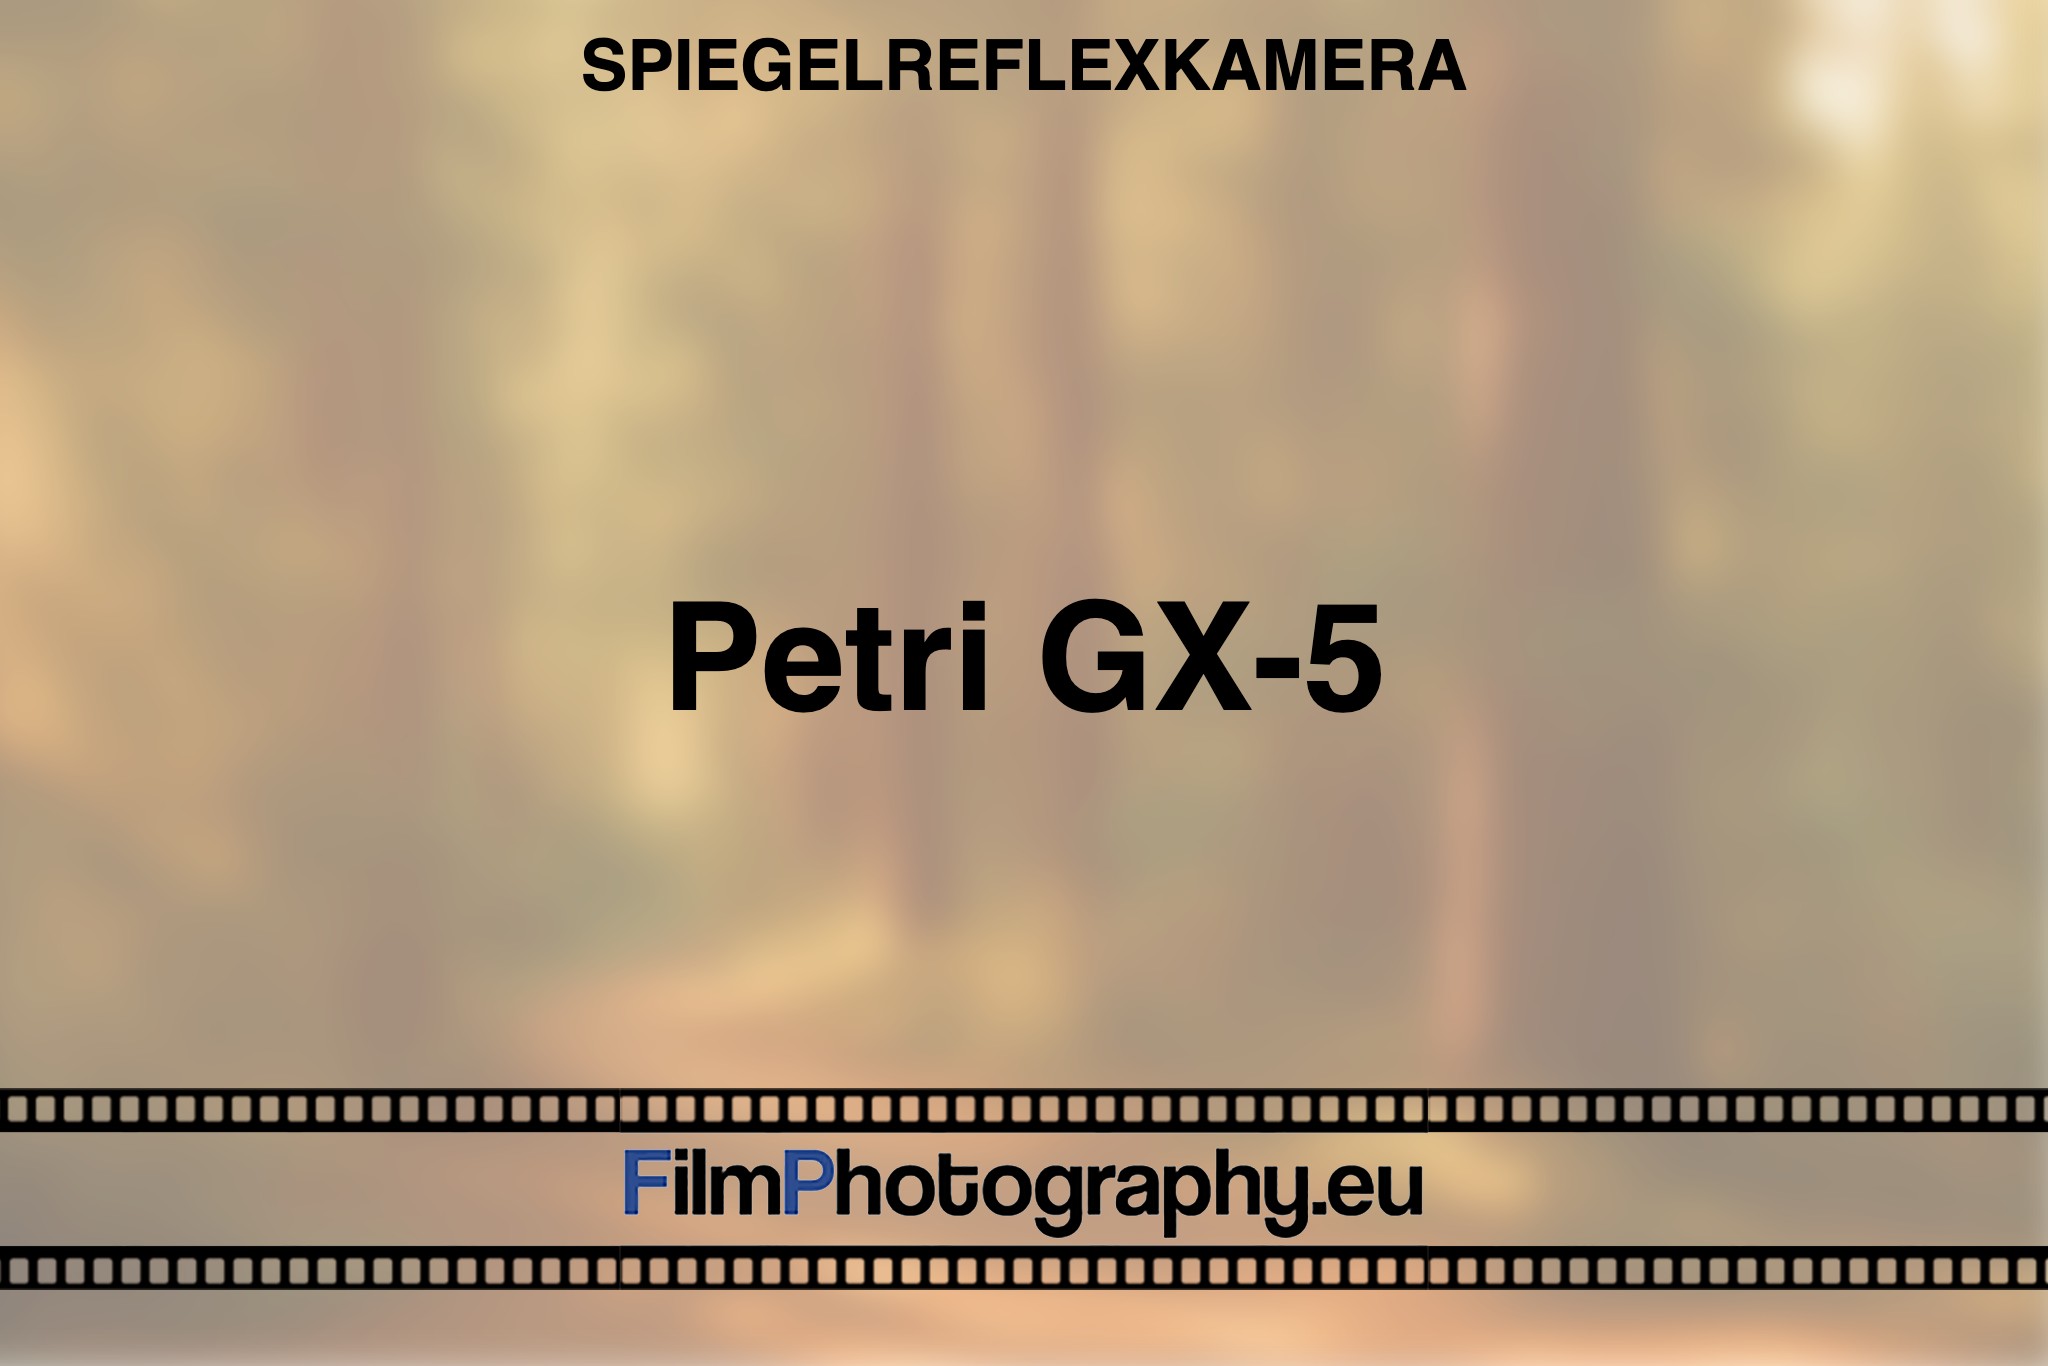 petri-gx-5-spiegelreflexkamera-bnv